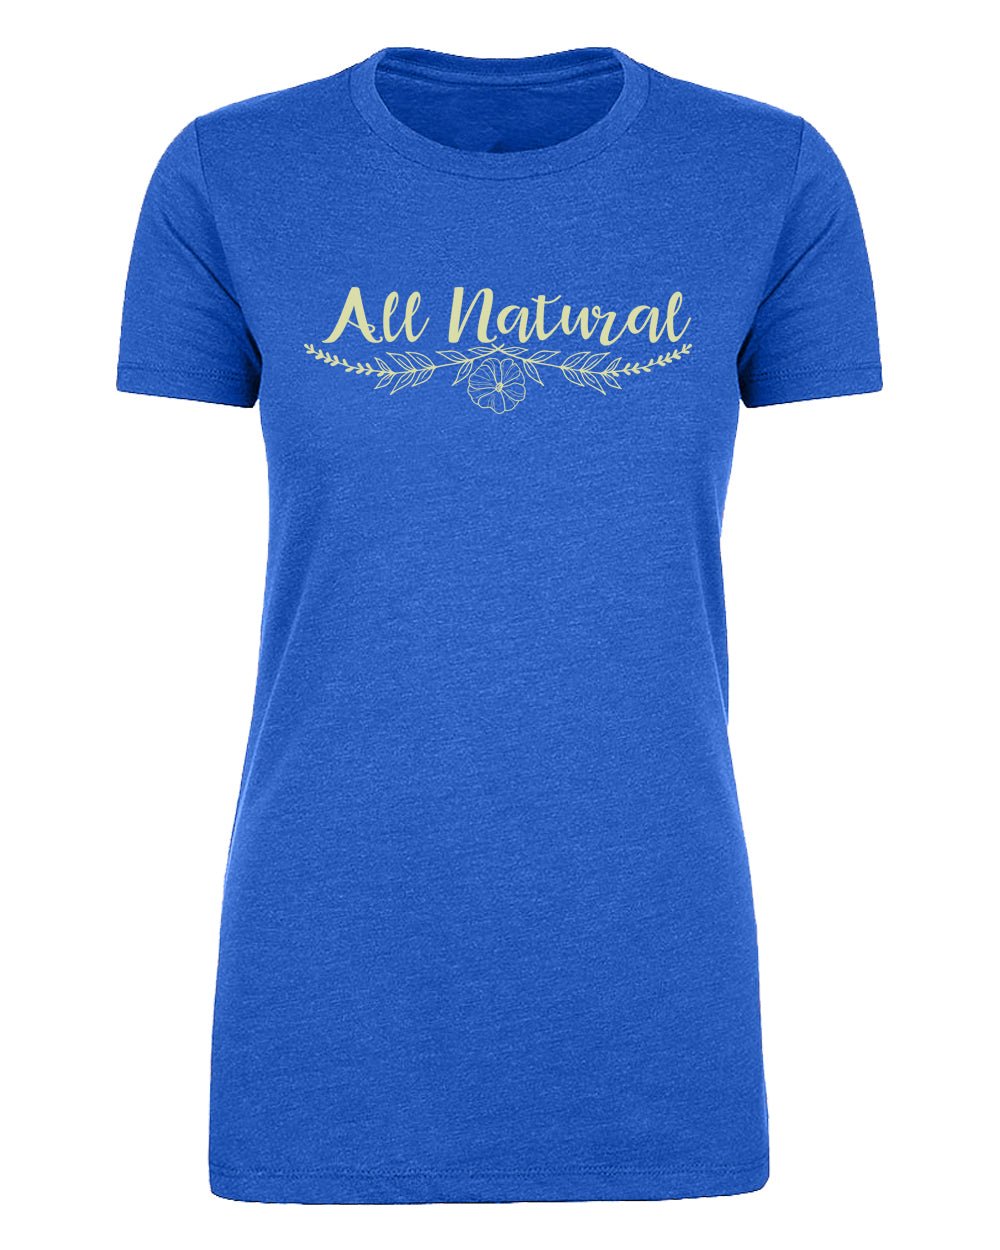 All Natural Floral Print Womens T Shirts - Mato & Hash